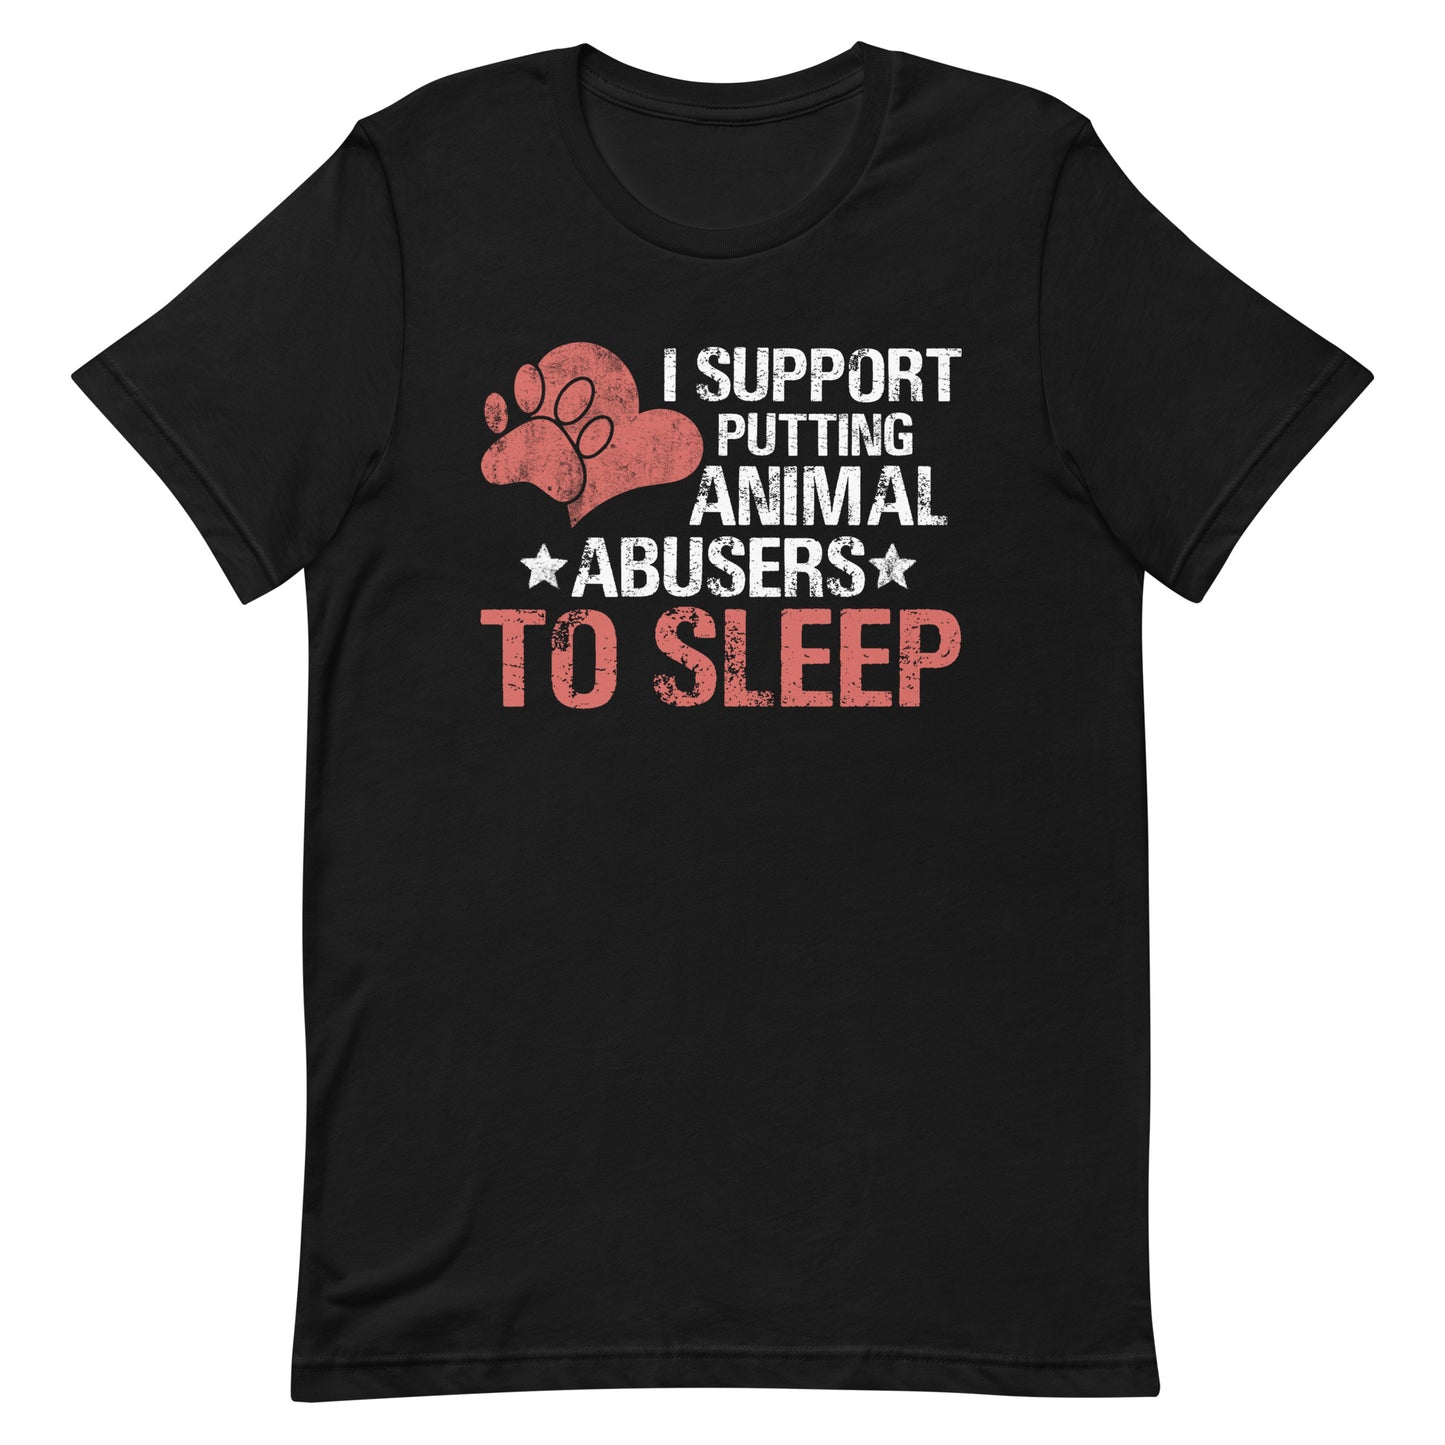 I Support Putting Animal Abusers to Sleep T-Shirt